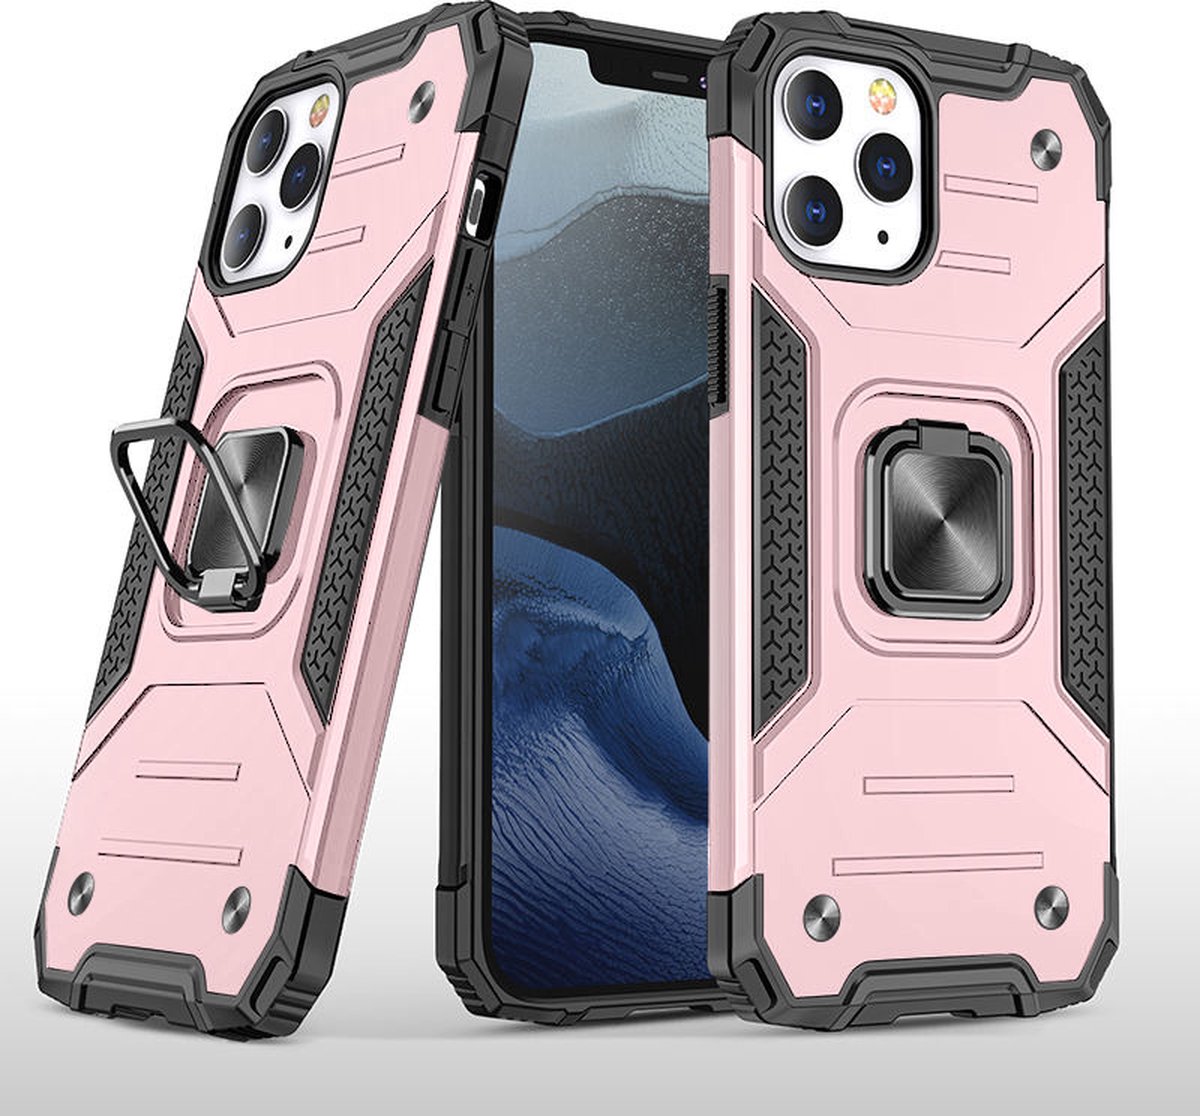 MCM iPhone 12 + iPhone 12 Pro (6,1 inch) Armor hoesje - Roze